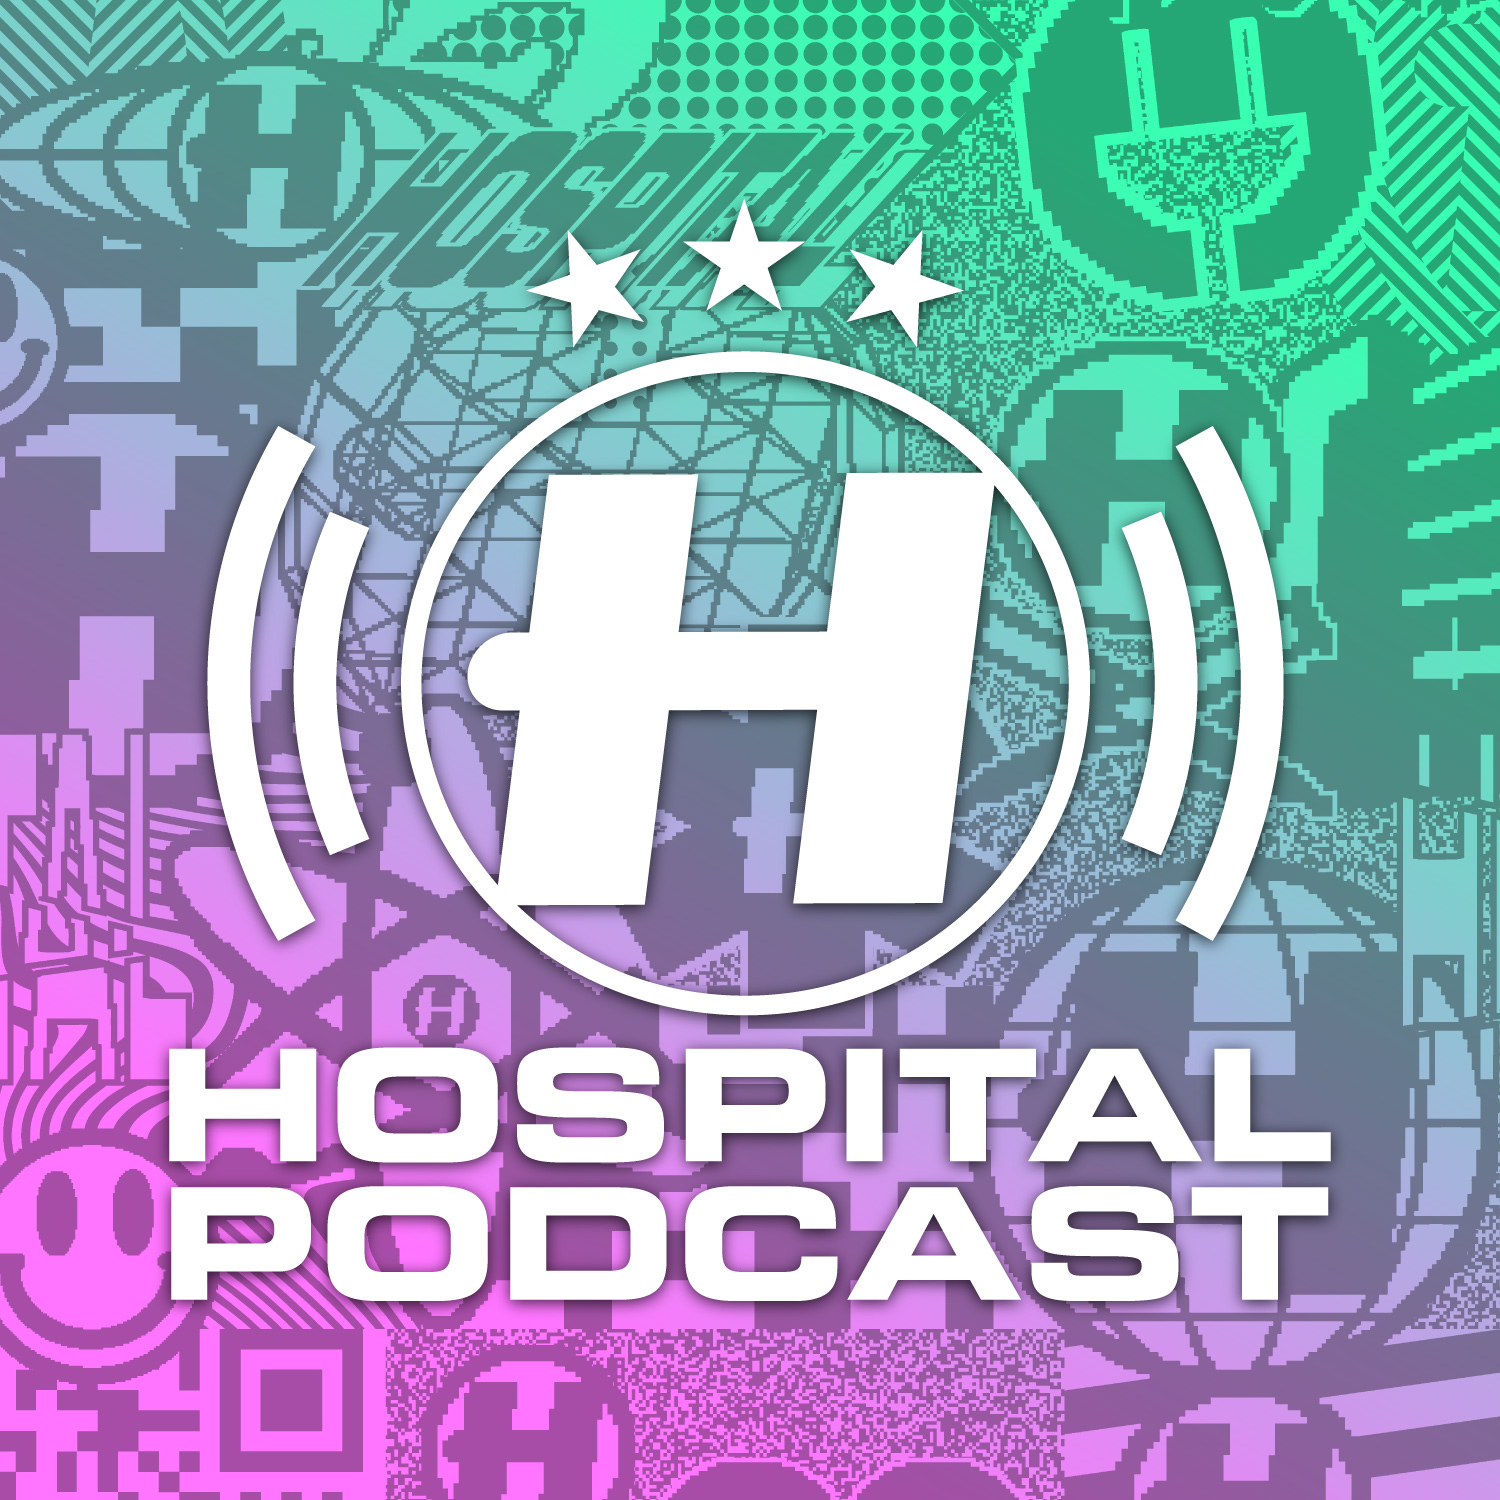 Hospital Podcast 418 with London Elektricity Artwork